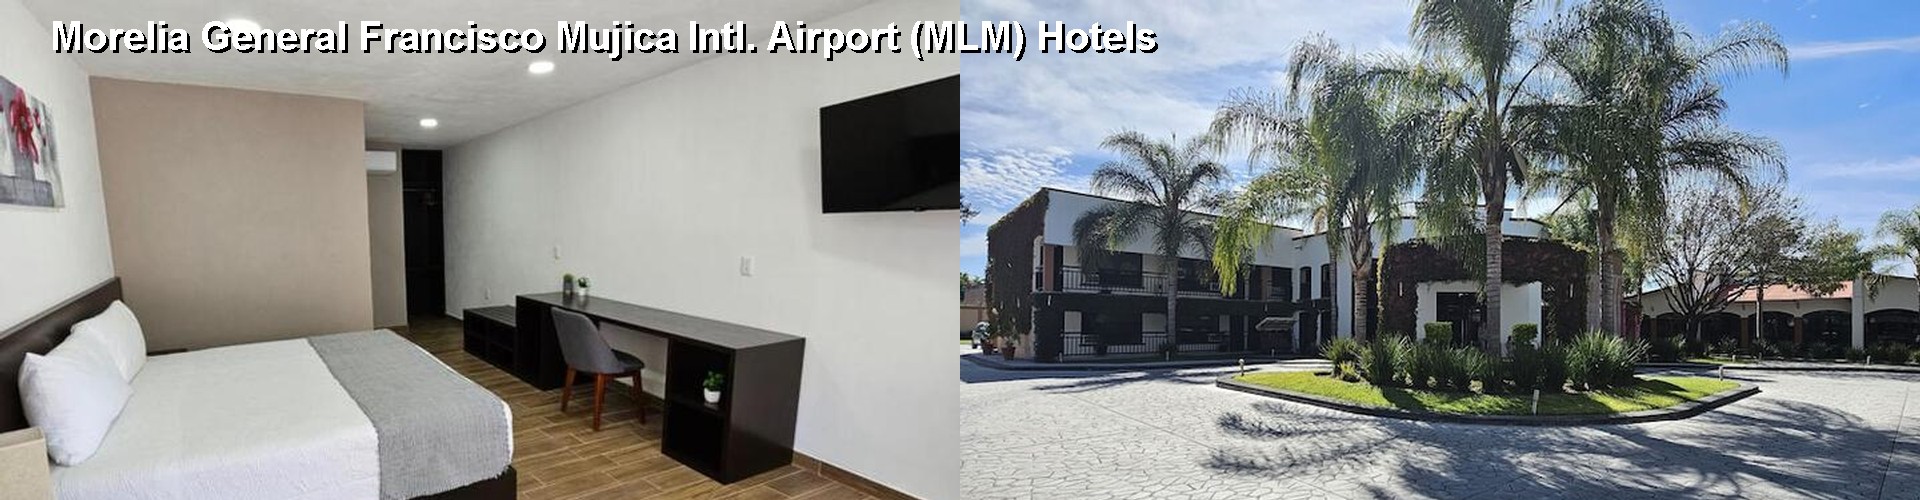 5 Best Hotels near Morelia General Francisco Mujica Intl. Airport (MLM)